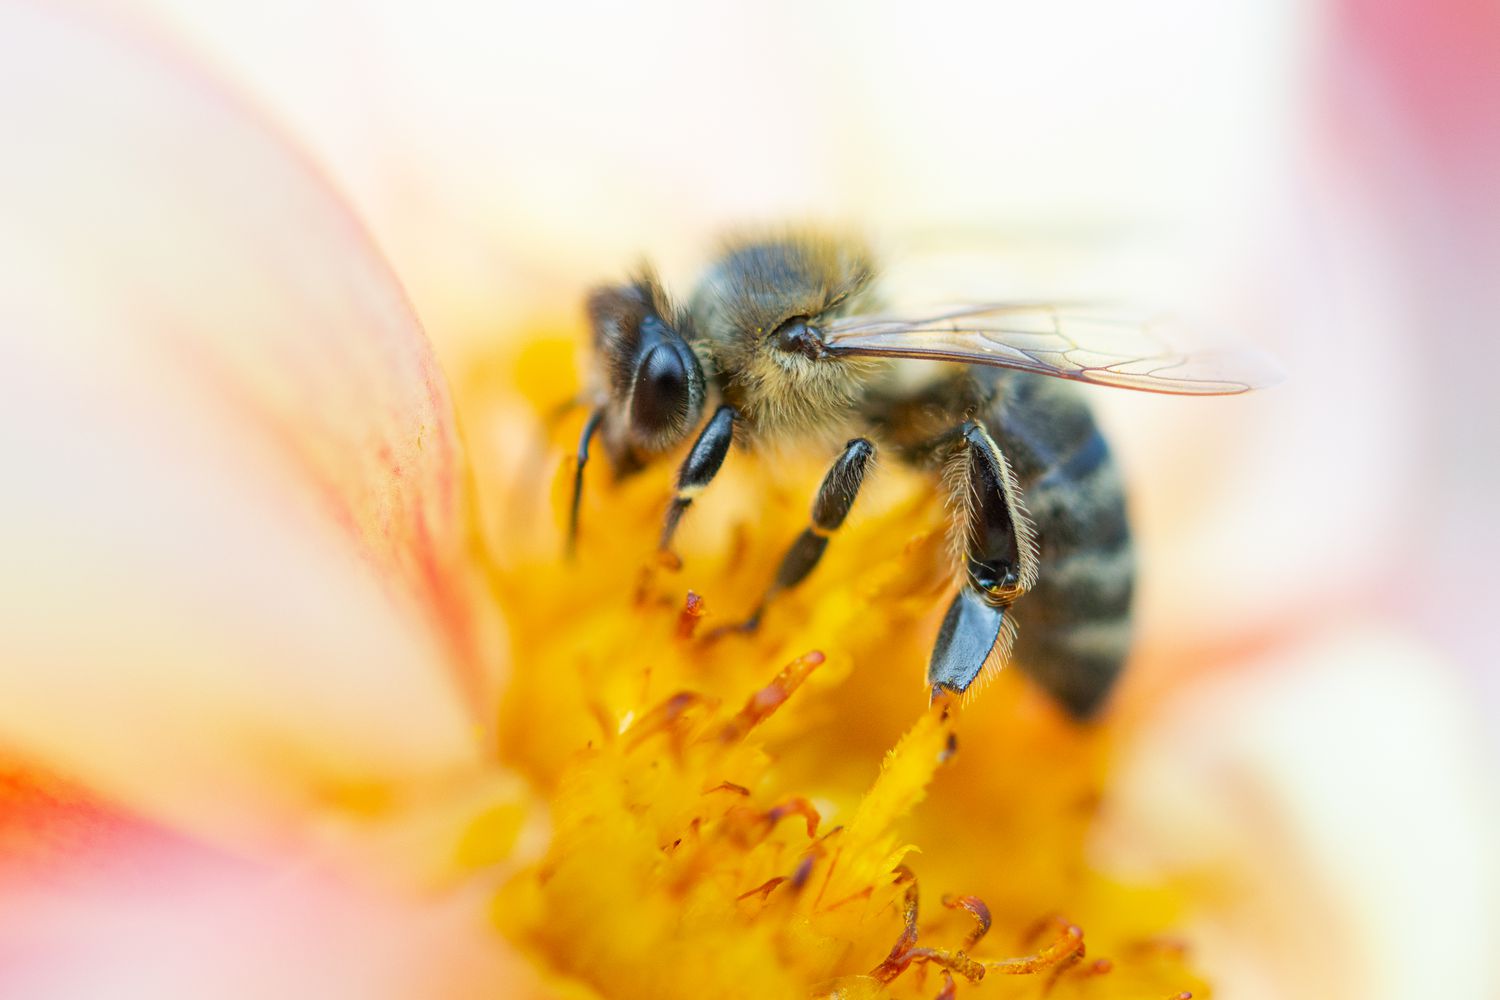 Honeybee climbing yellow pollen cluster in flower closeup